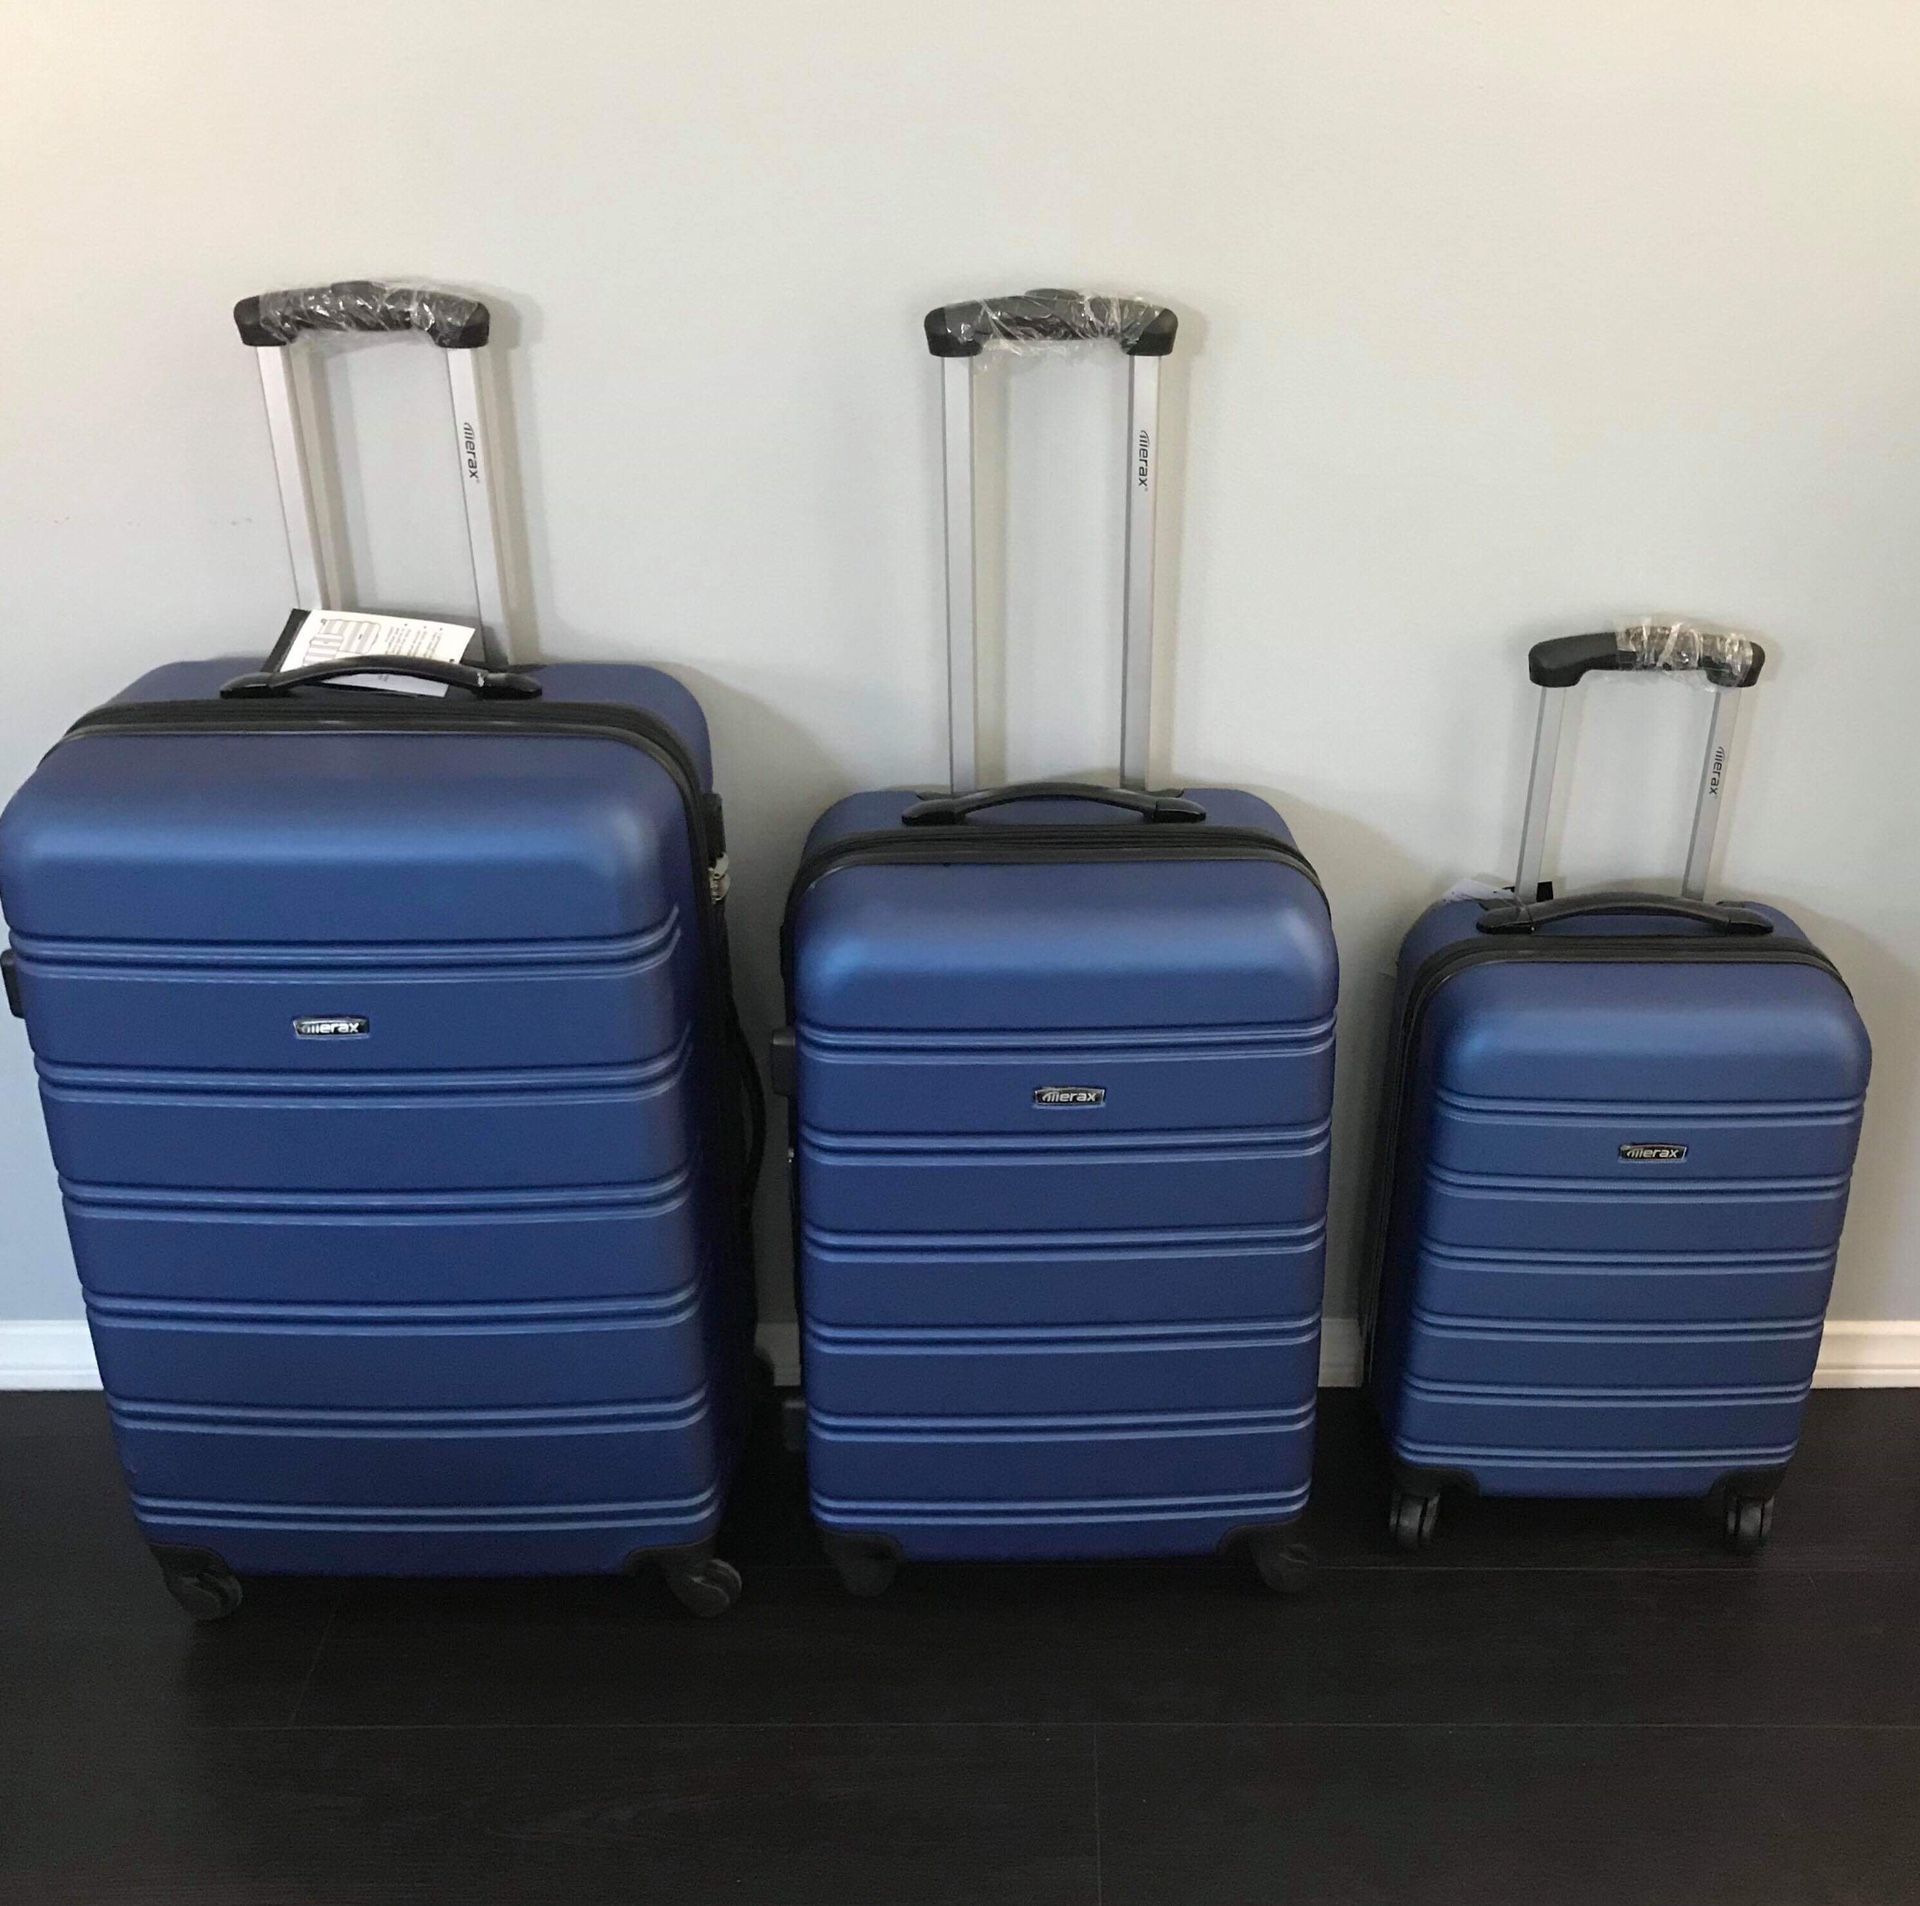 Brand new luggage set